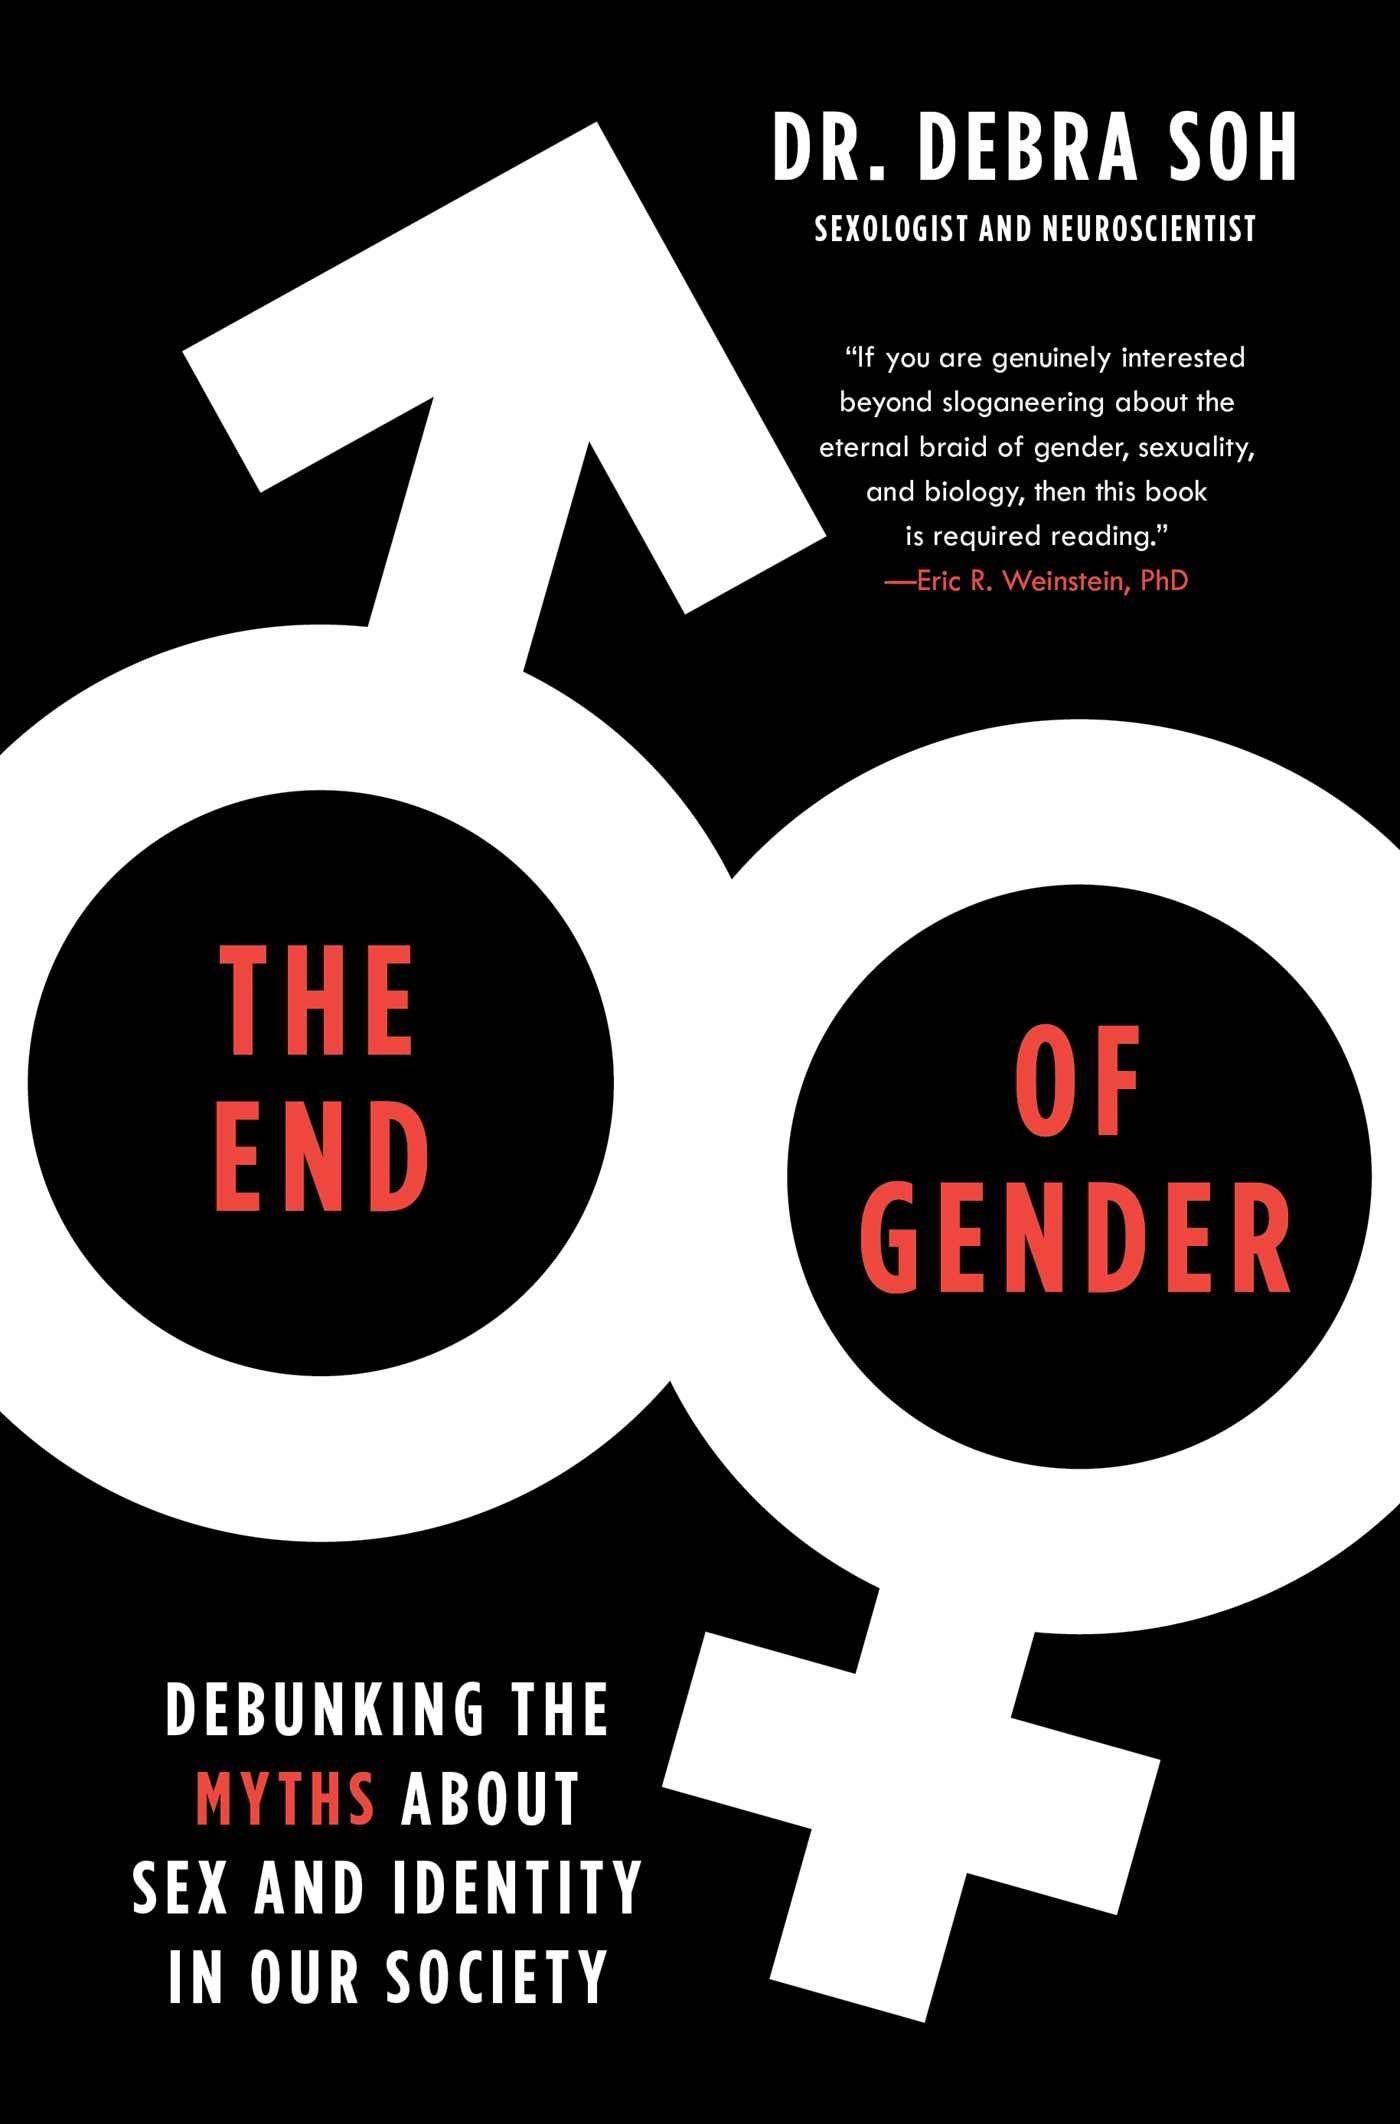 Dr. Debra Soh - Author of 'The End of Gender